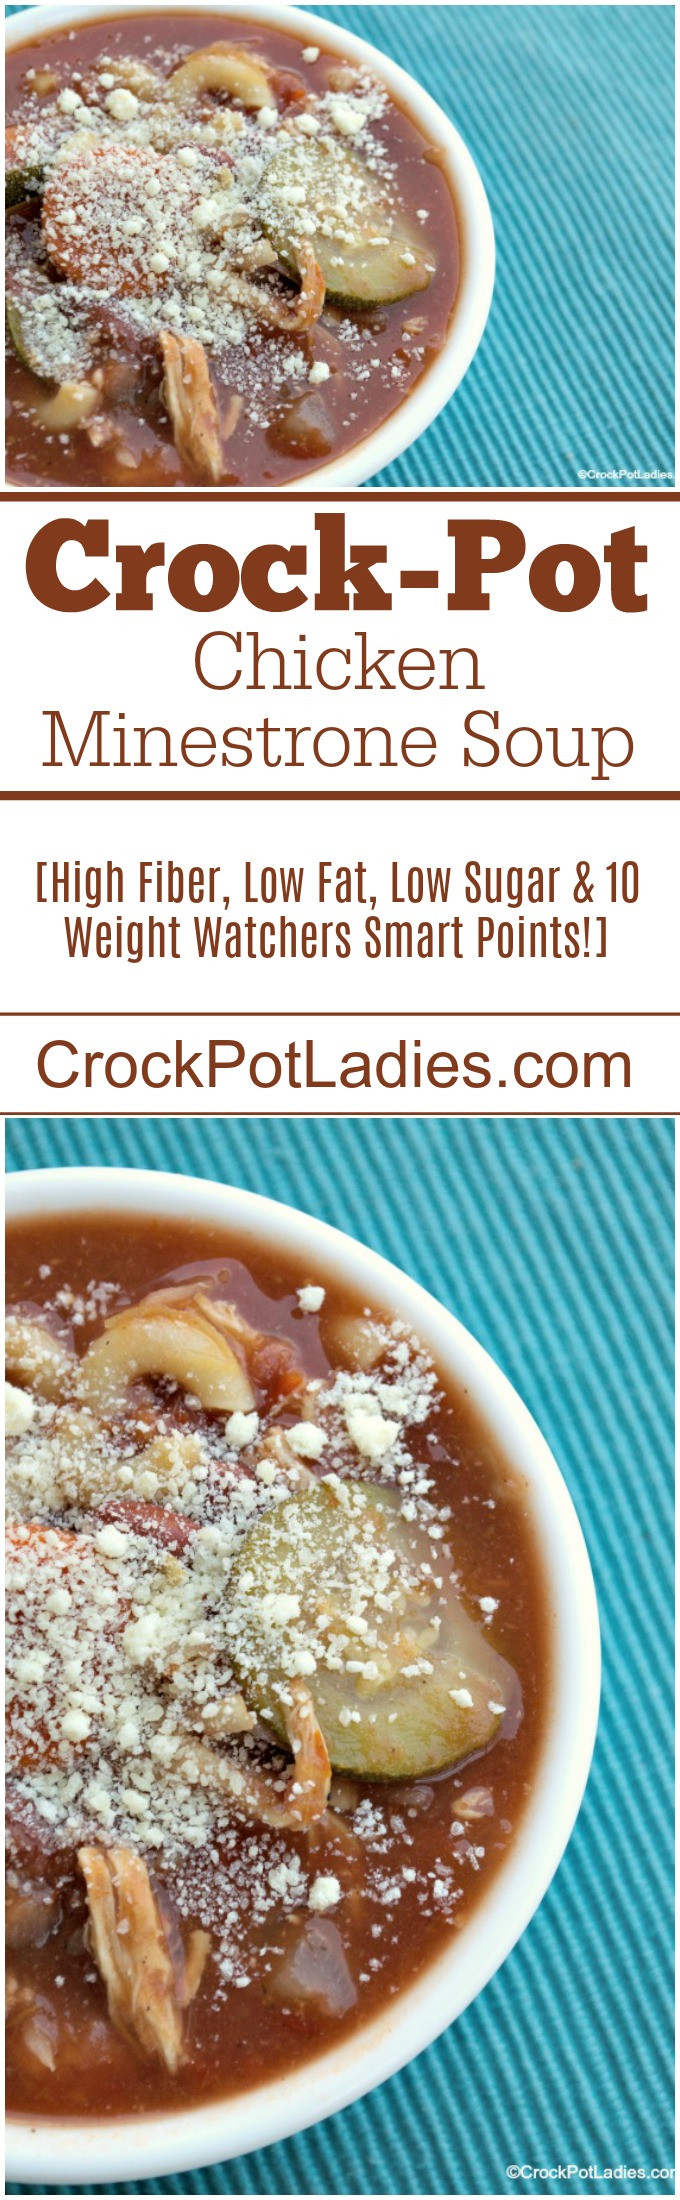 High Fiber Soup Recipes
 Crock Pot Chicken Minestrone Soup Crock Pot La s